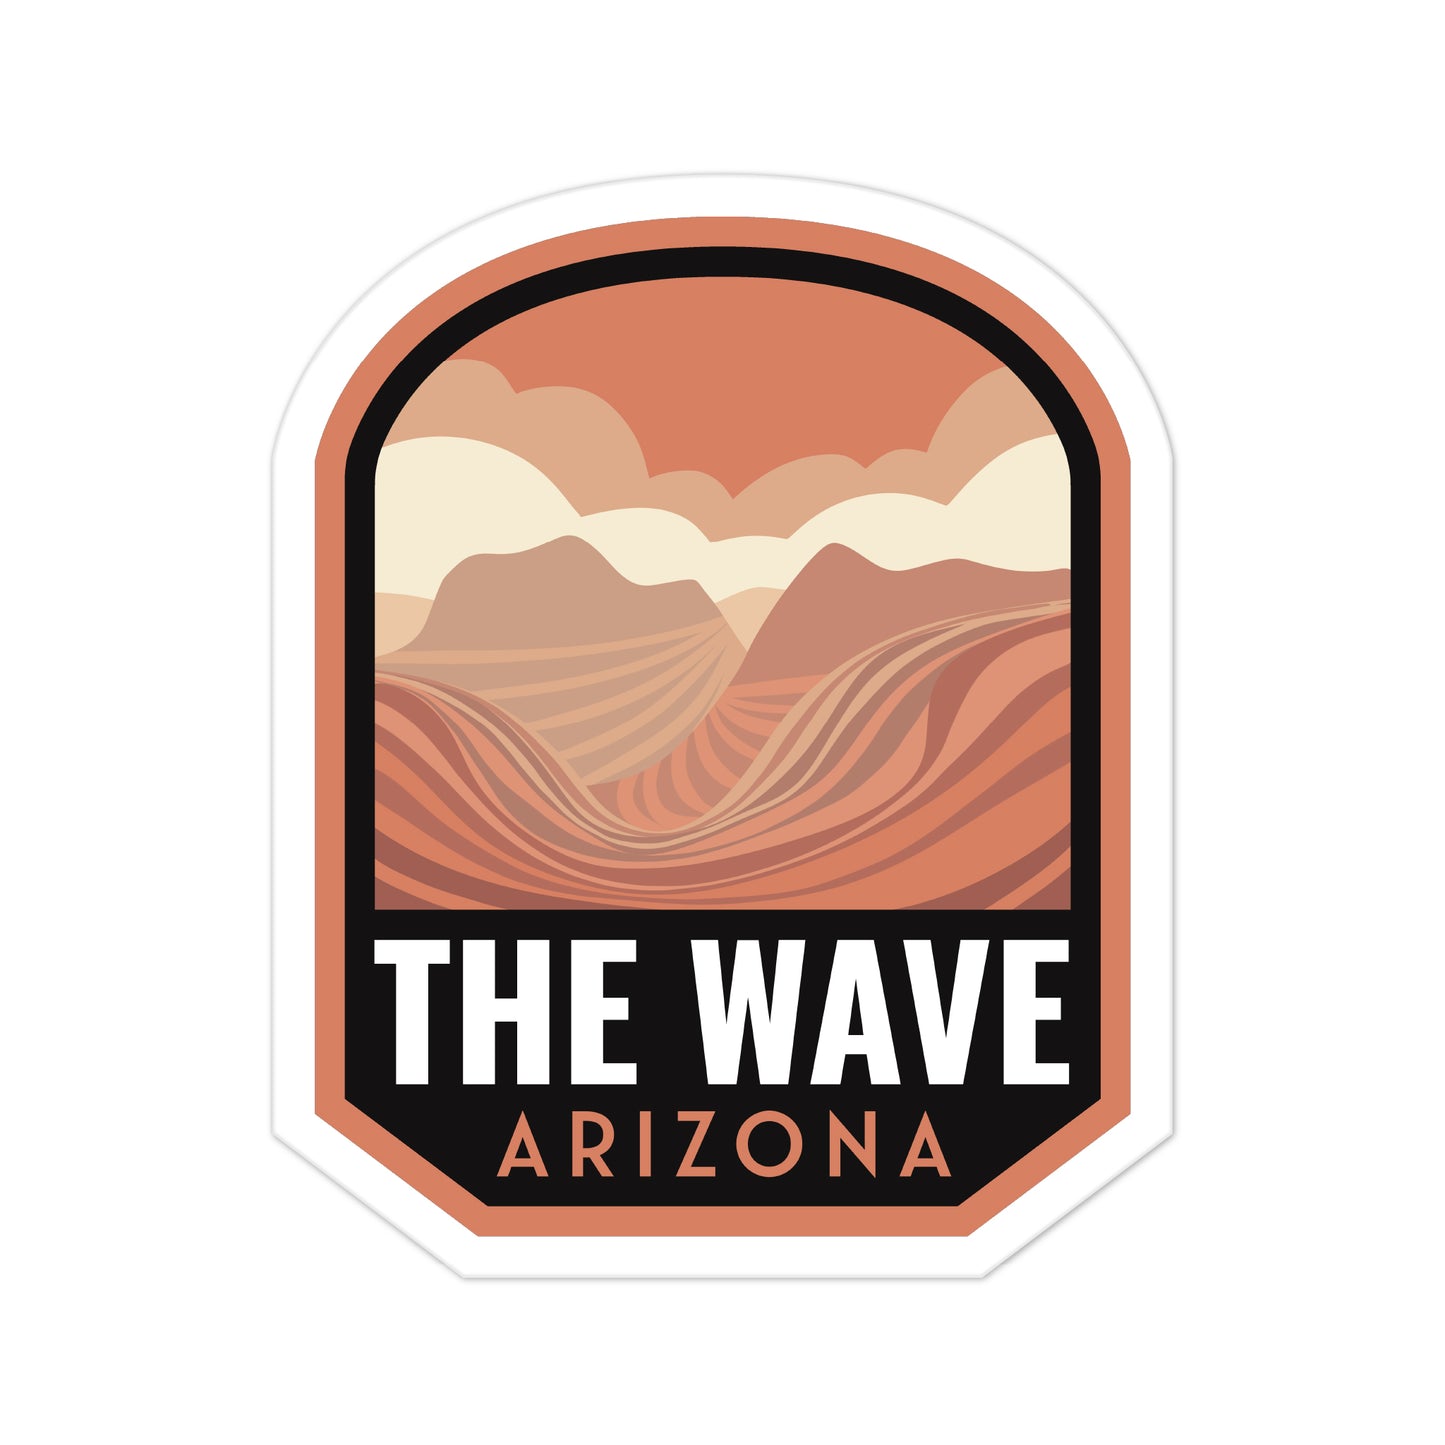 A sticker of The Wave Arizona